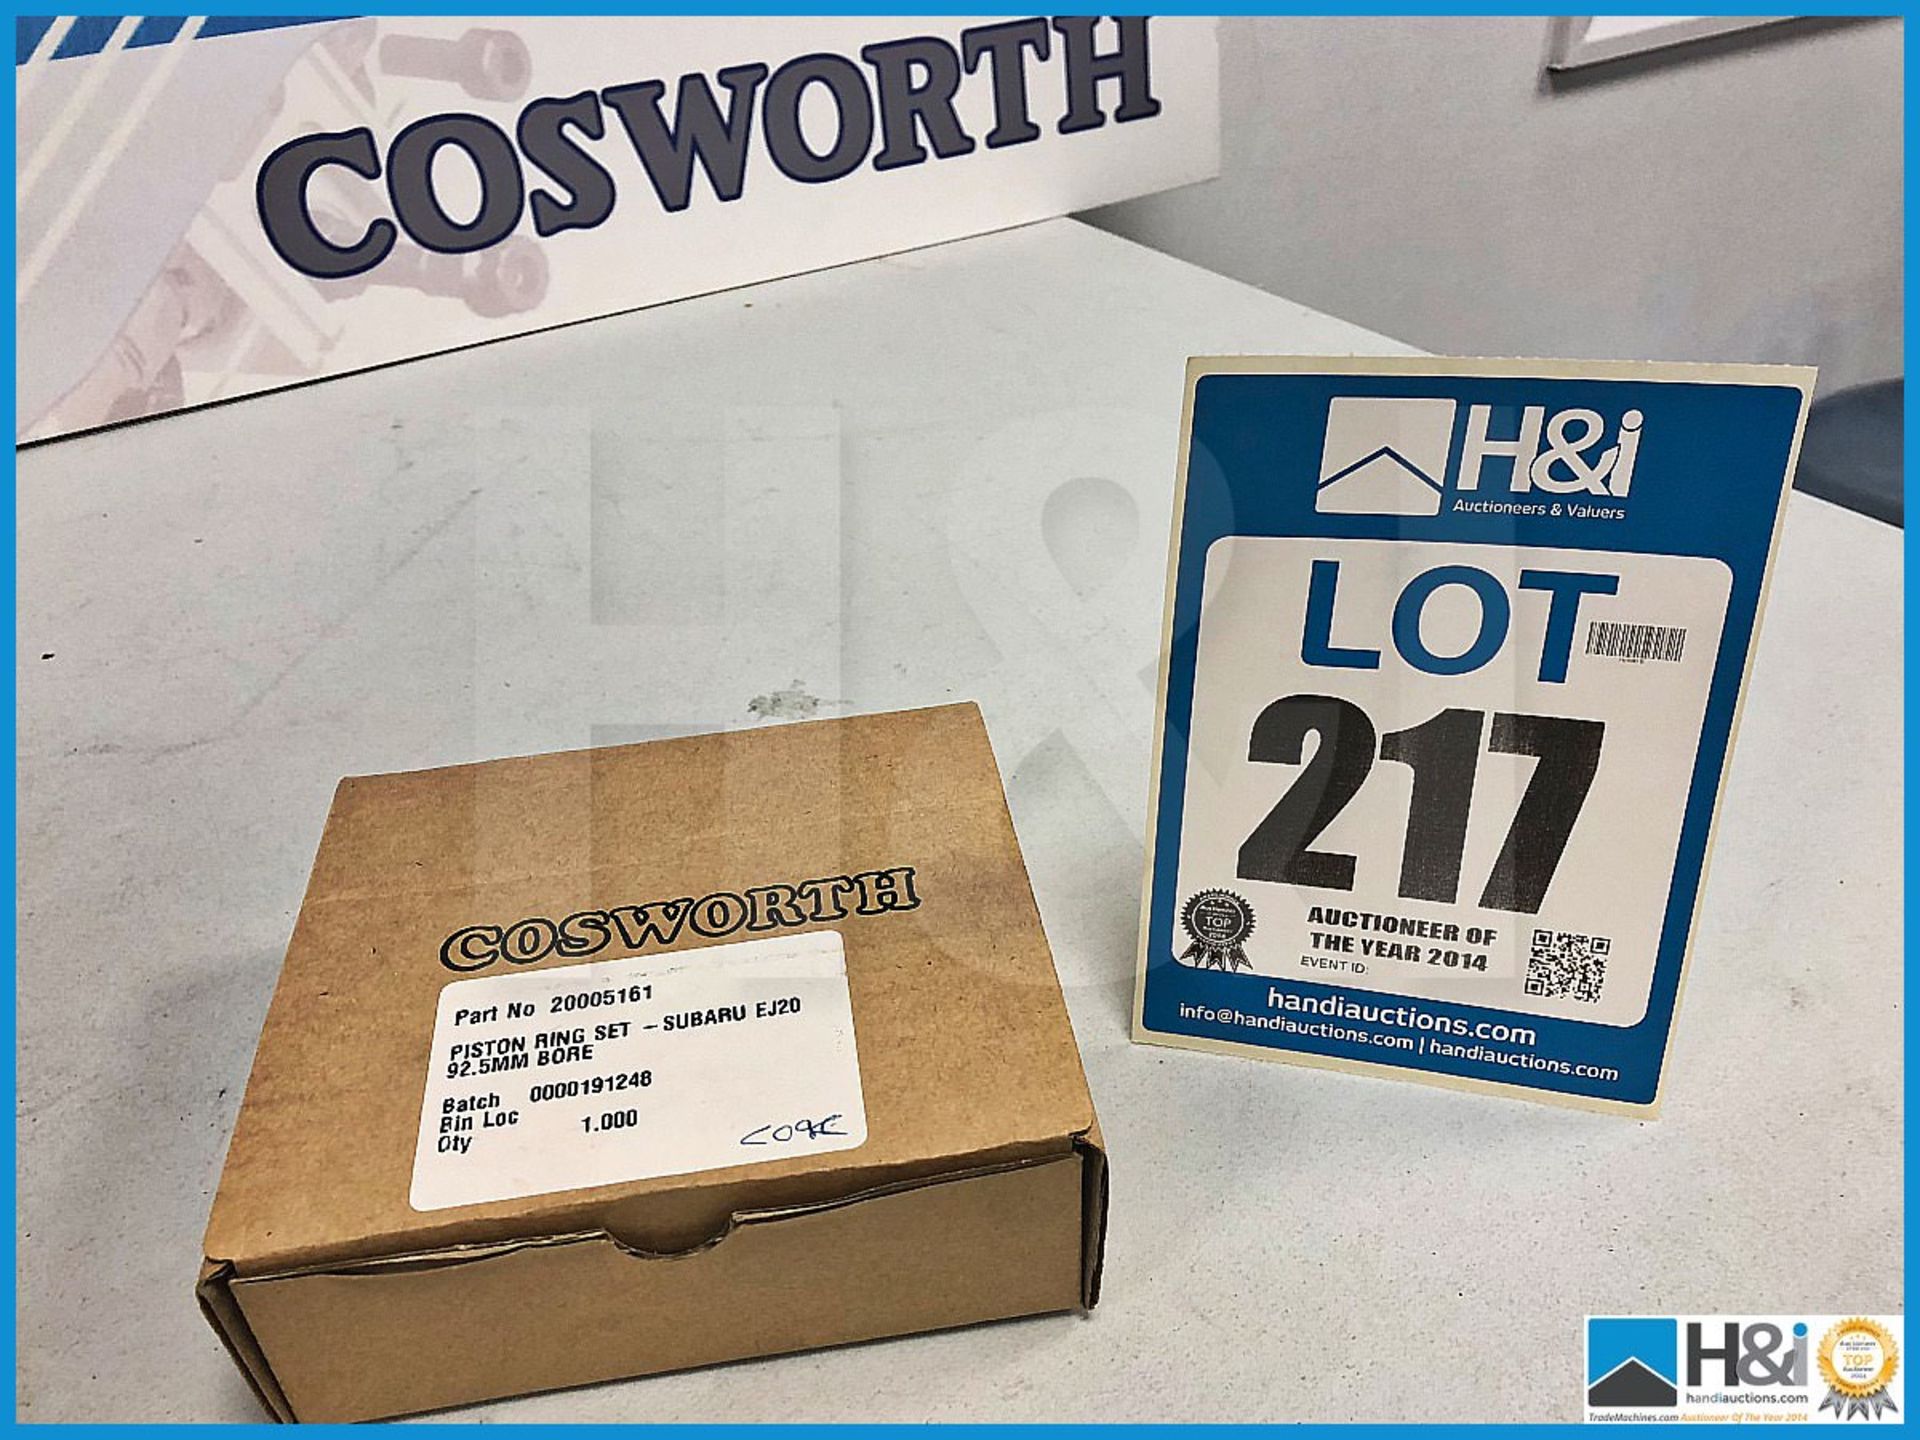 1 x Cosworth piston ring set - Subaru EJ20 92.5mm bore. Code: 20005161